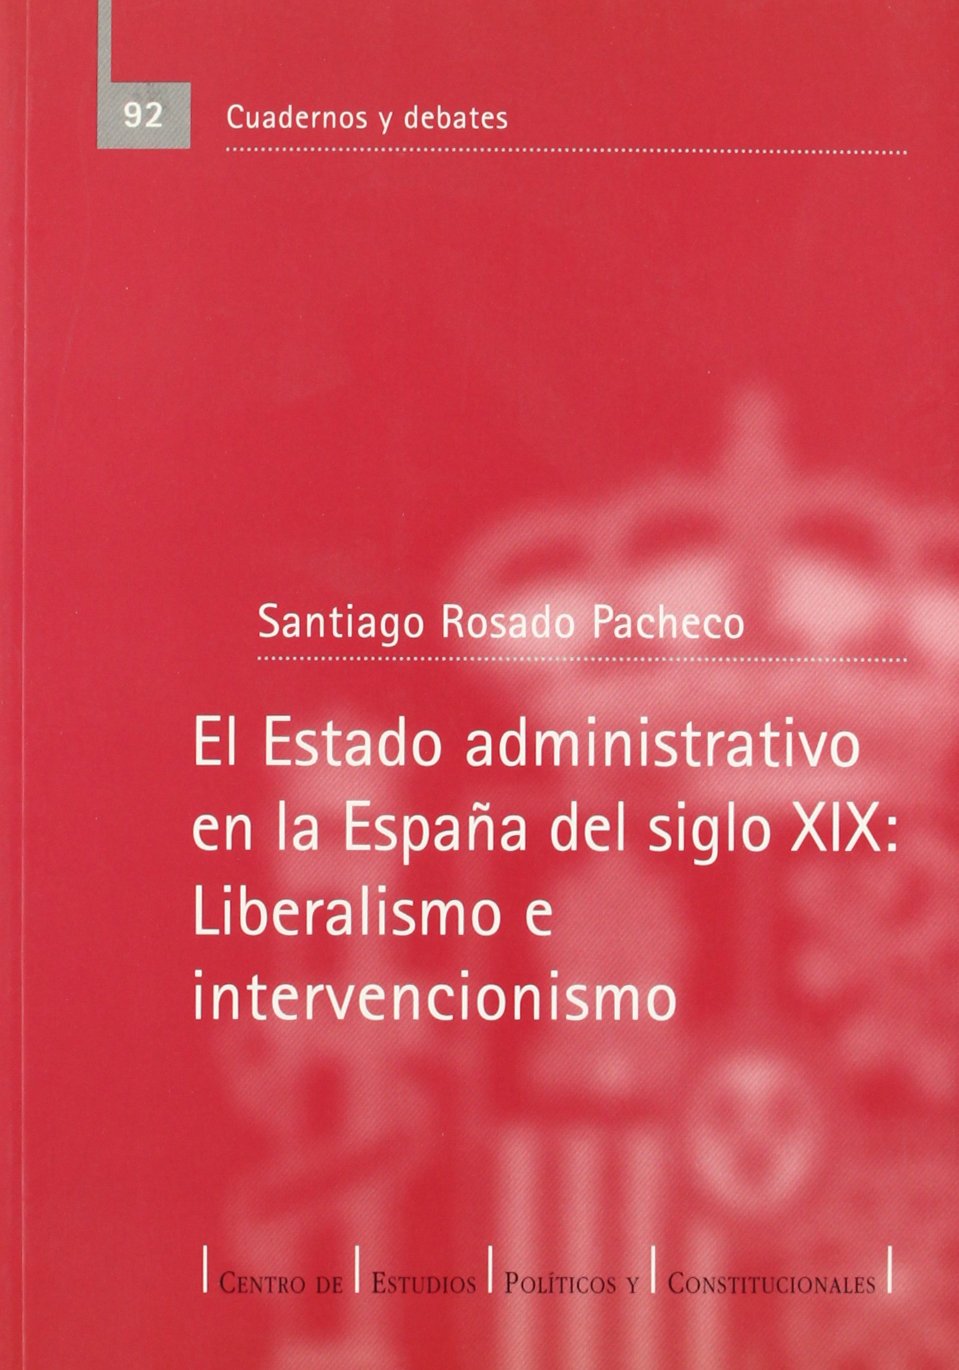 El Estado administrativo en la España del siglo XIX: liberalismo e intervencionismo